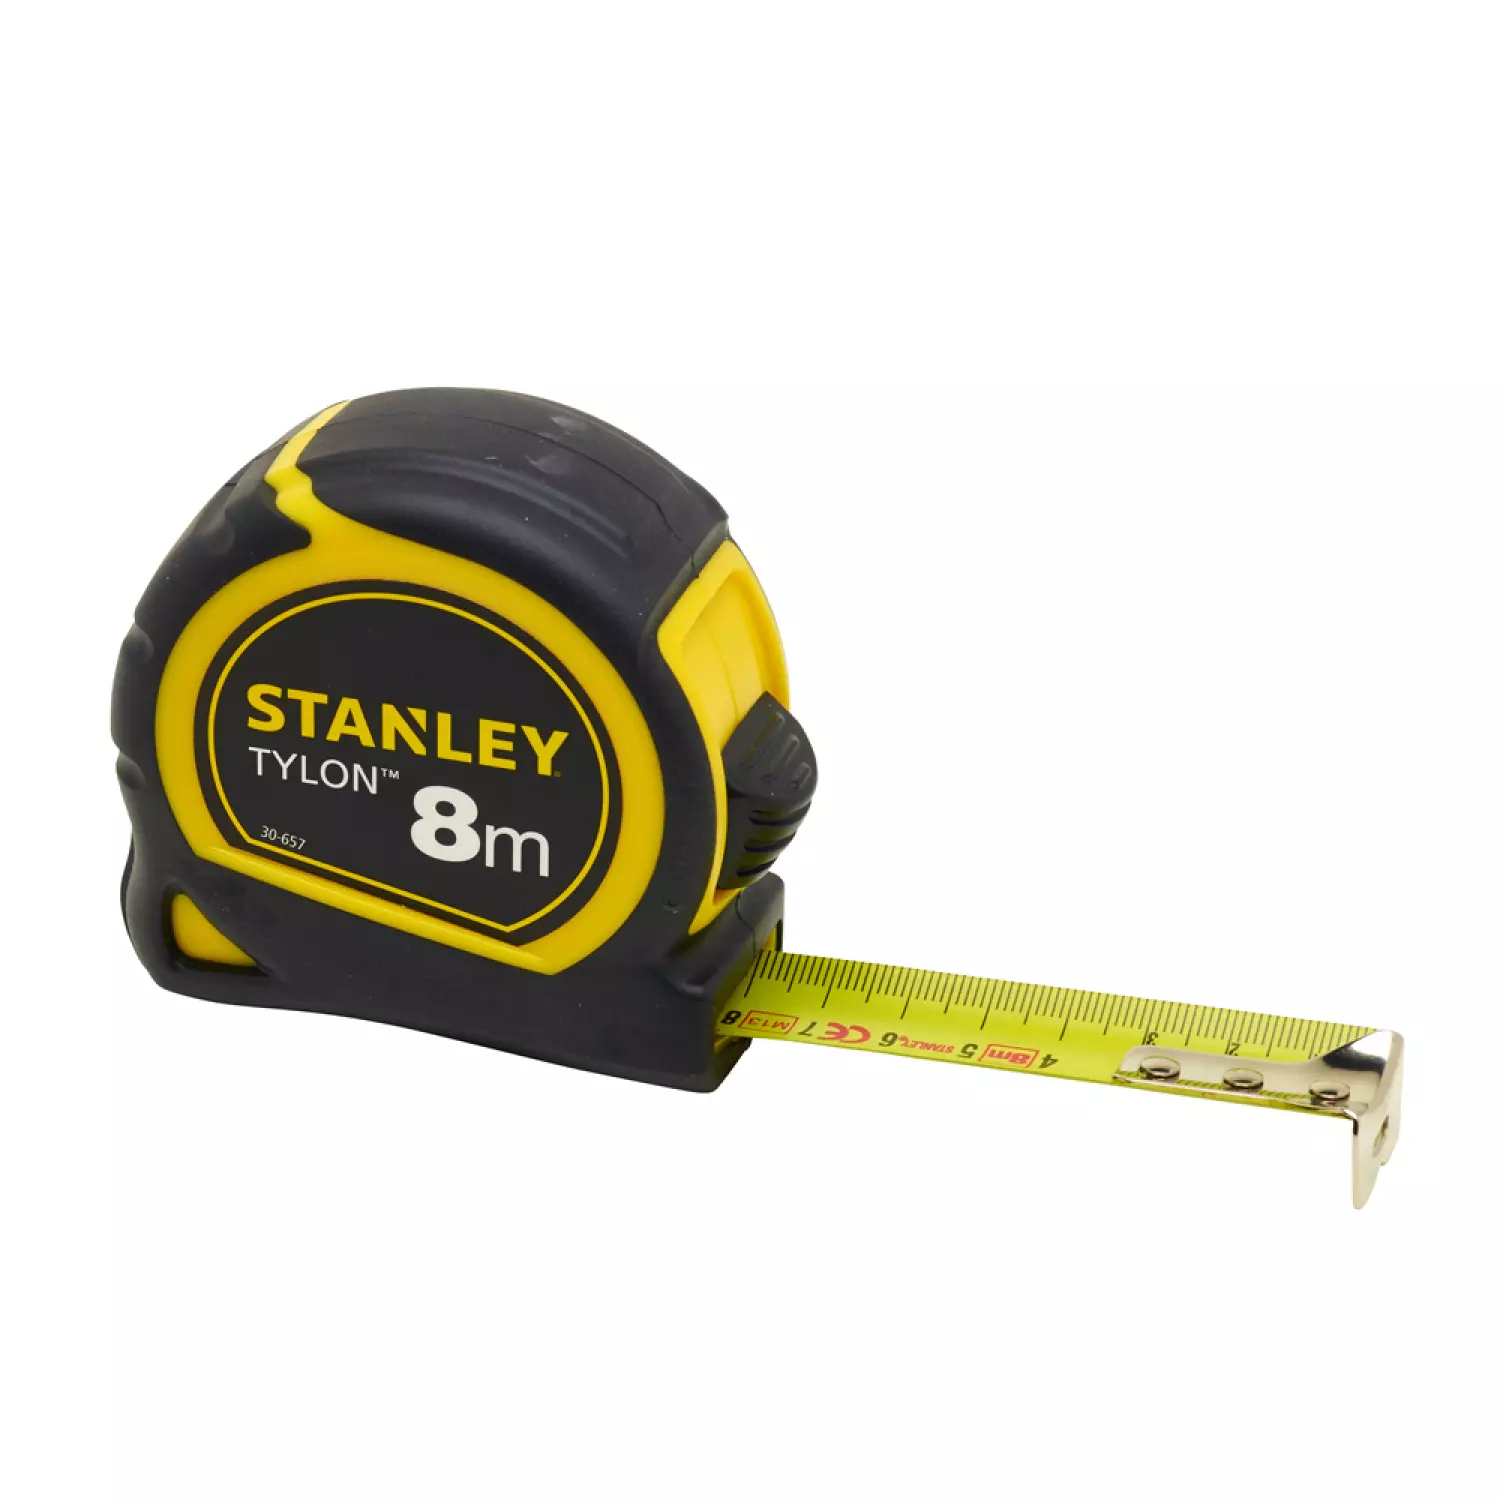 Stanley 0-30-657 Tylon Rolmaat - 8m x 25mm-image